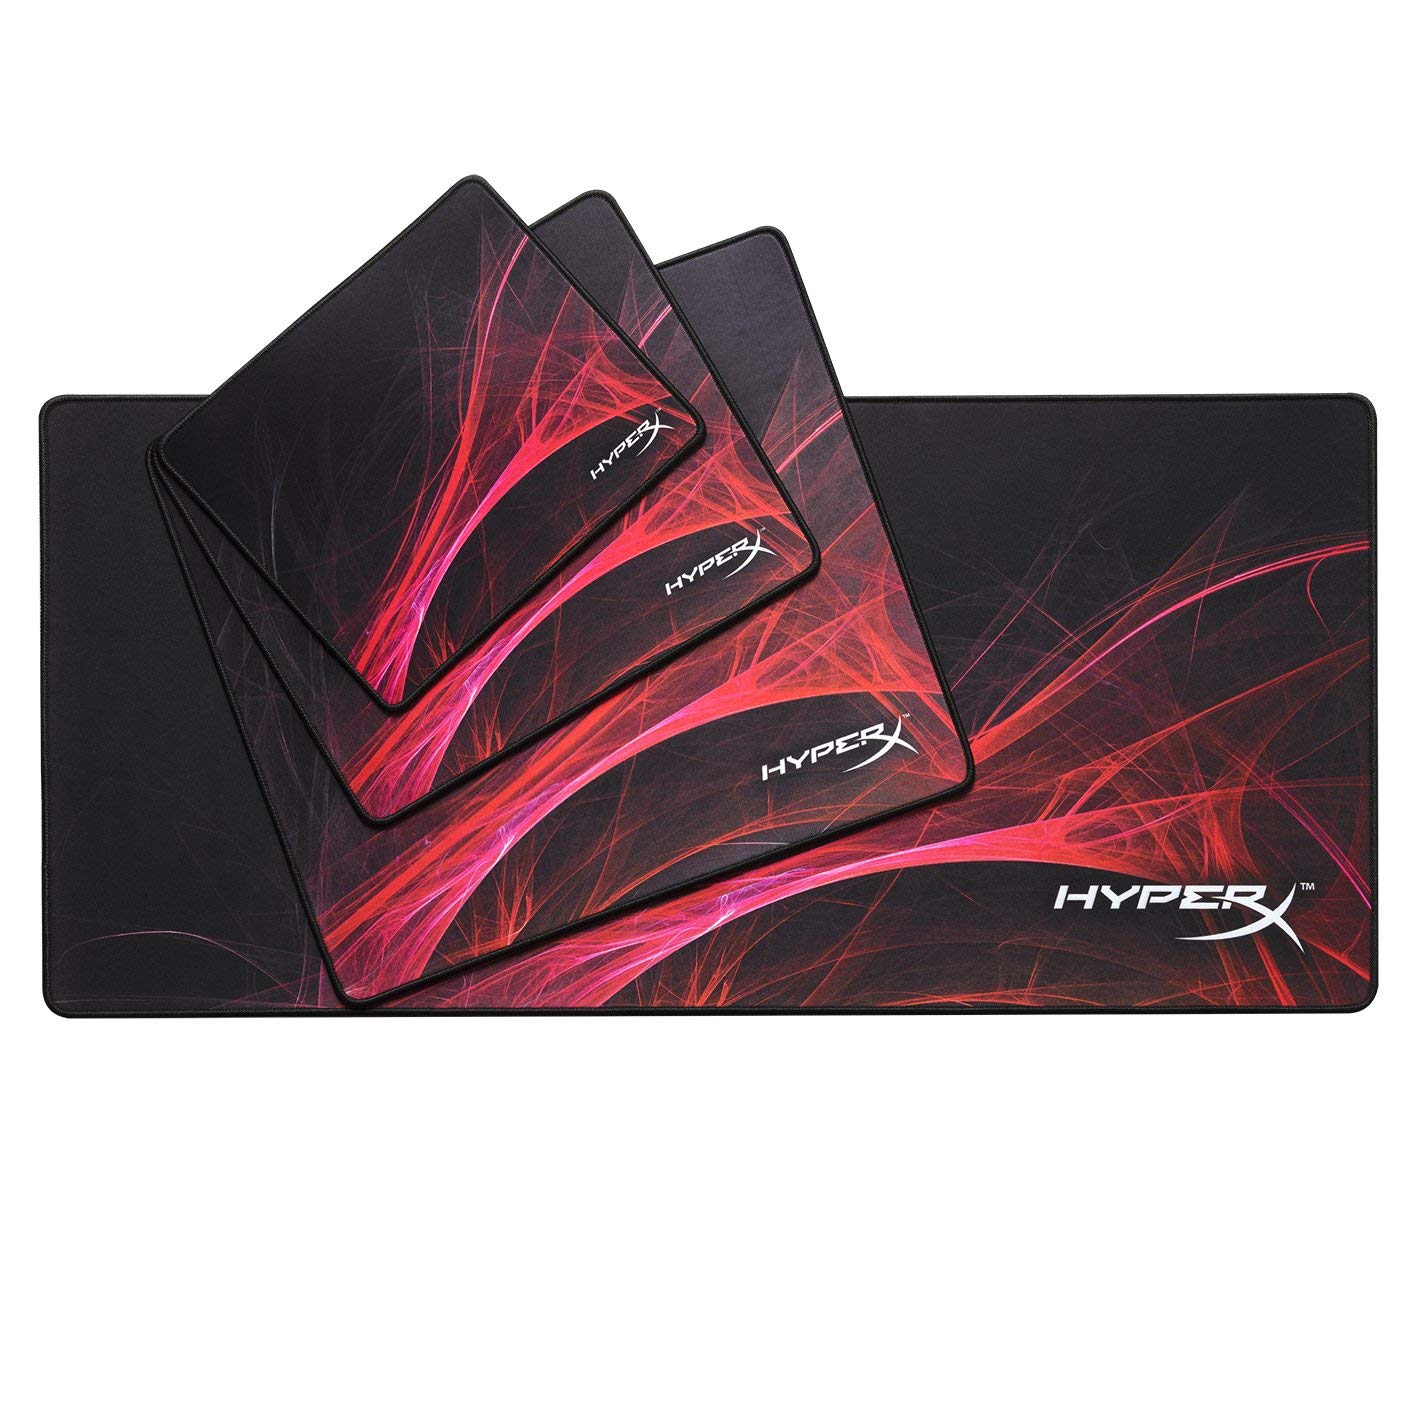 HyperX FURY S Speed Edition Gaming Mouse Pad (Medium) ของแท้ แผ่นรองเมาส์